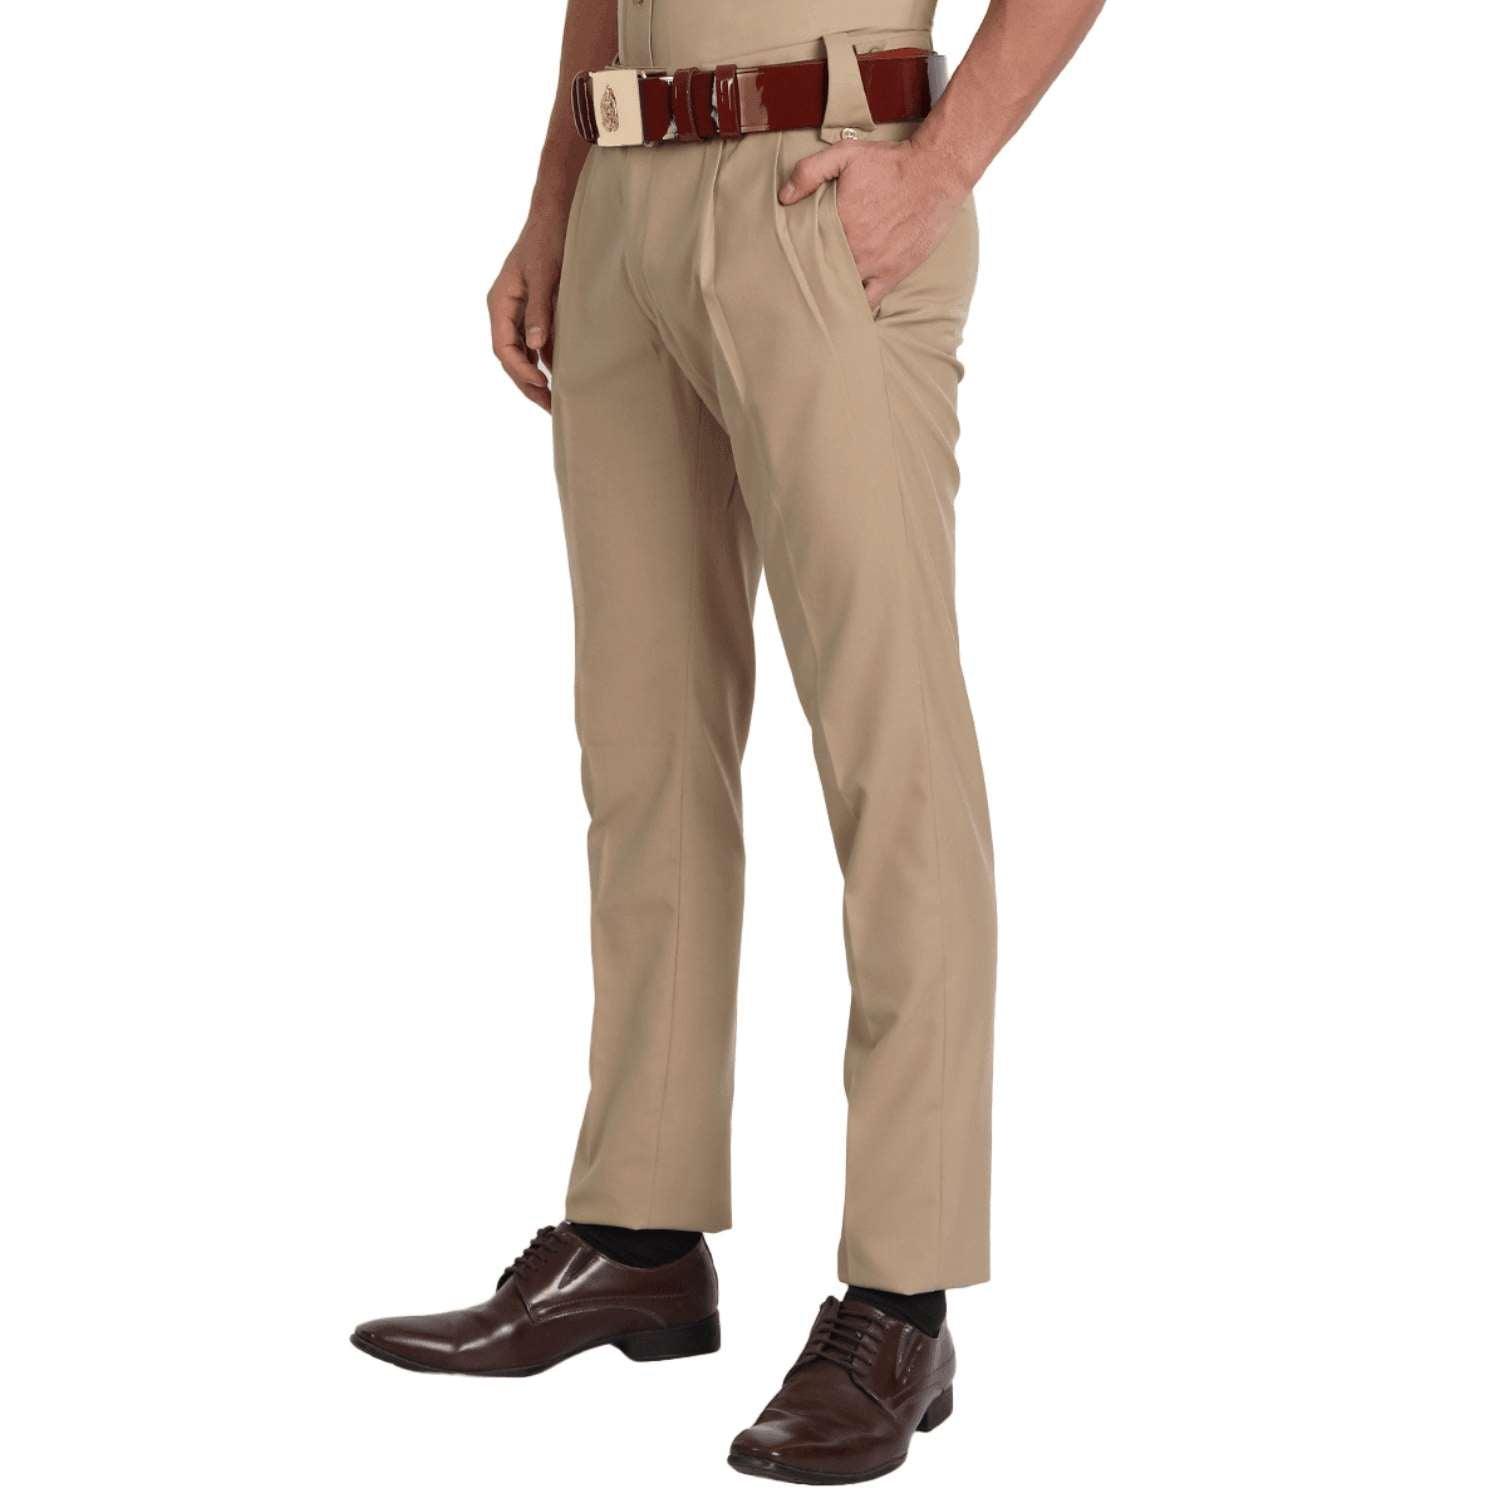 Men's Uniform Pants - Elegant & Functional Work Pants for Men